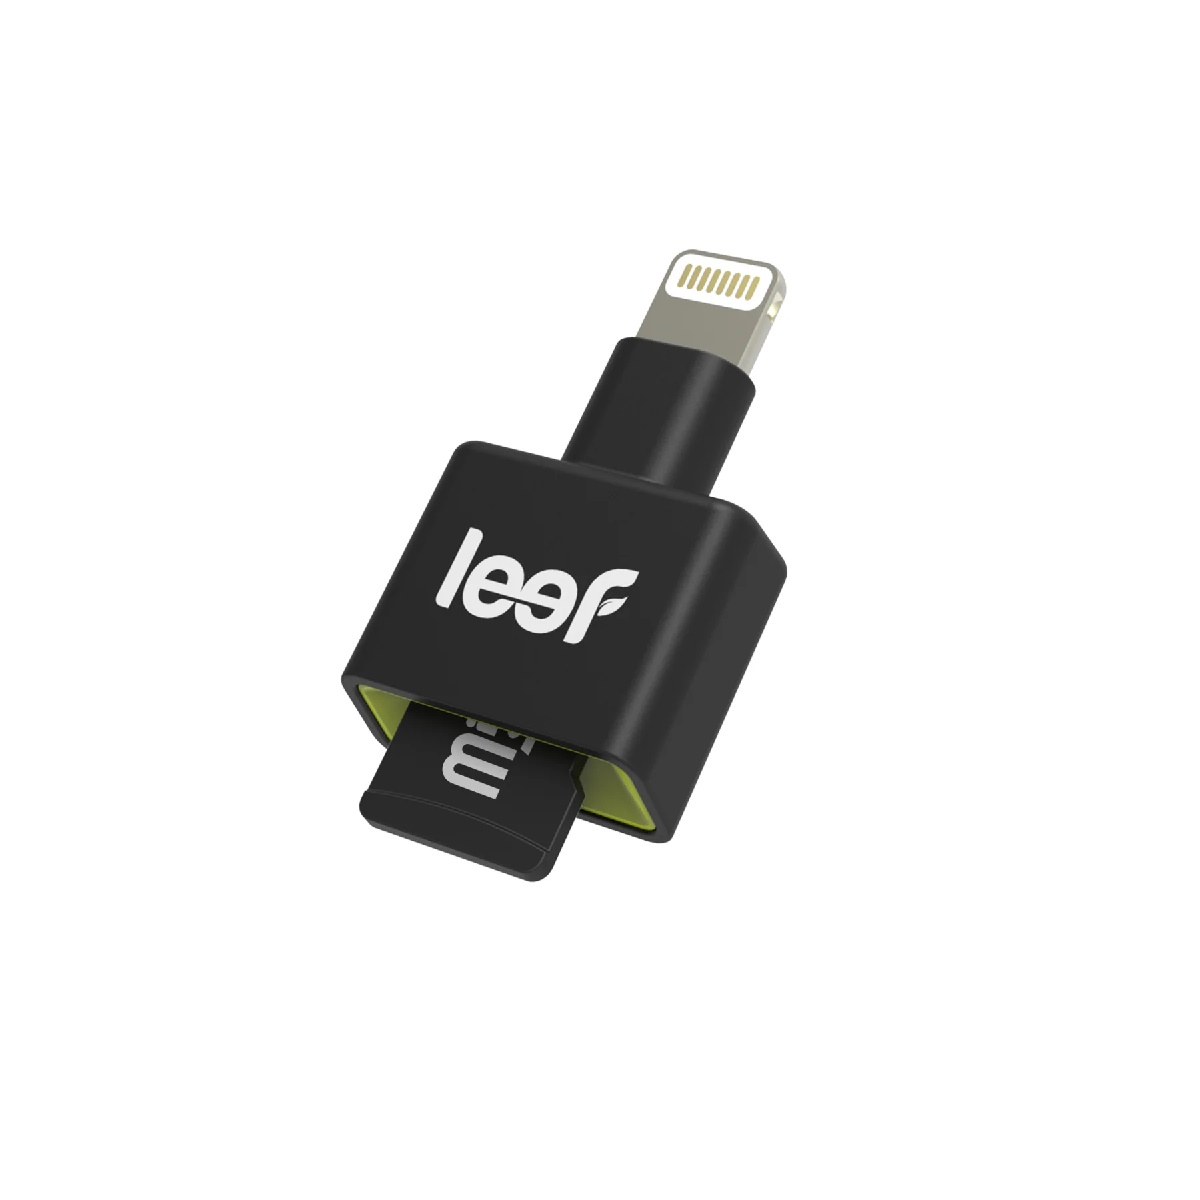 Leef iAccess 3 - La mejor si usas tarjetas microSD